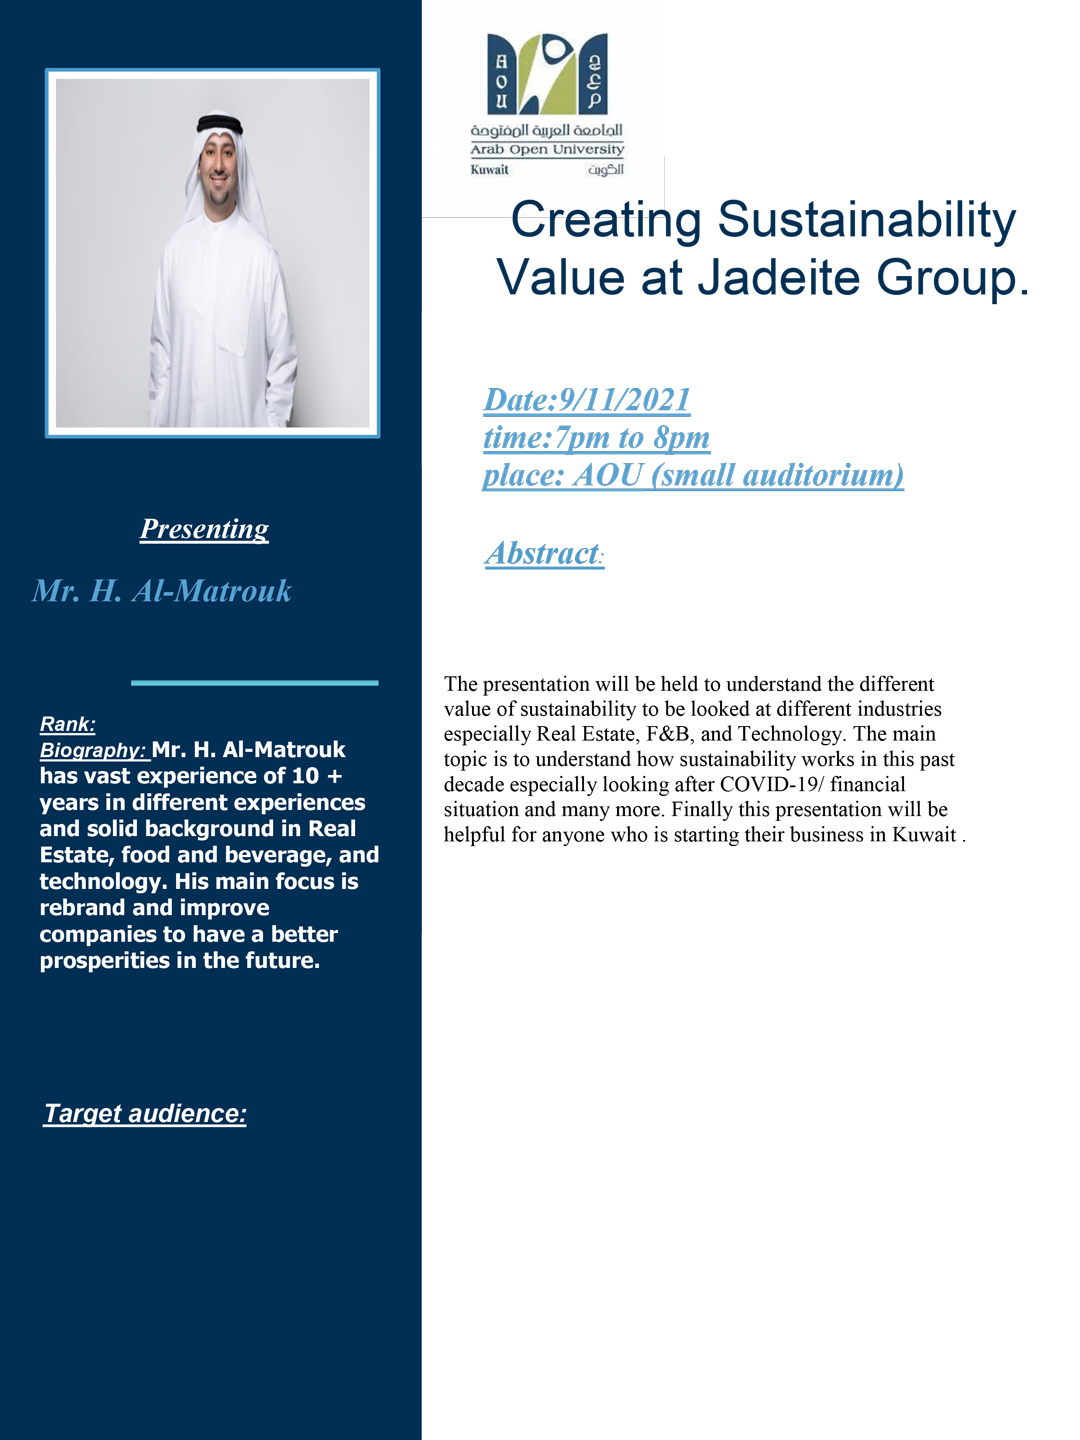 Creating-Sustainability-Value-at-Jadeite-Group.jpg